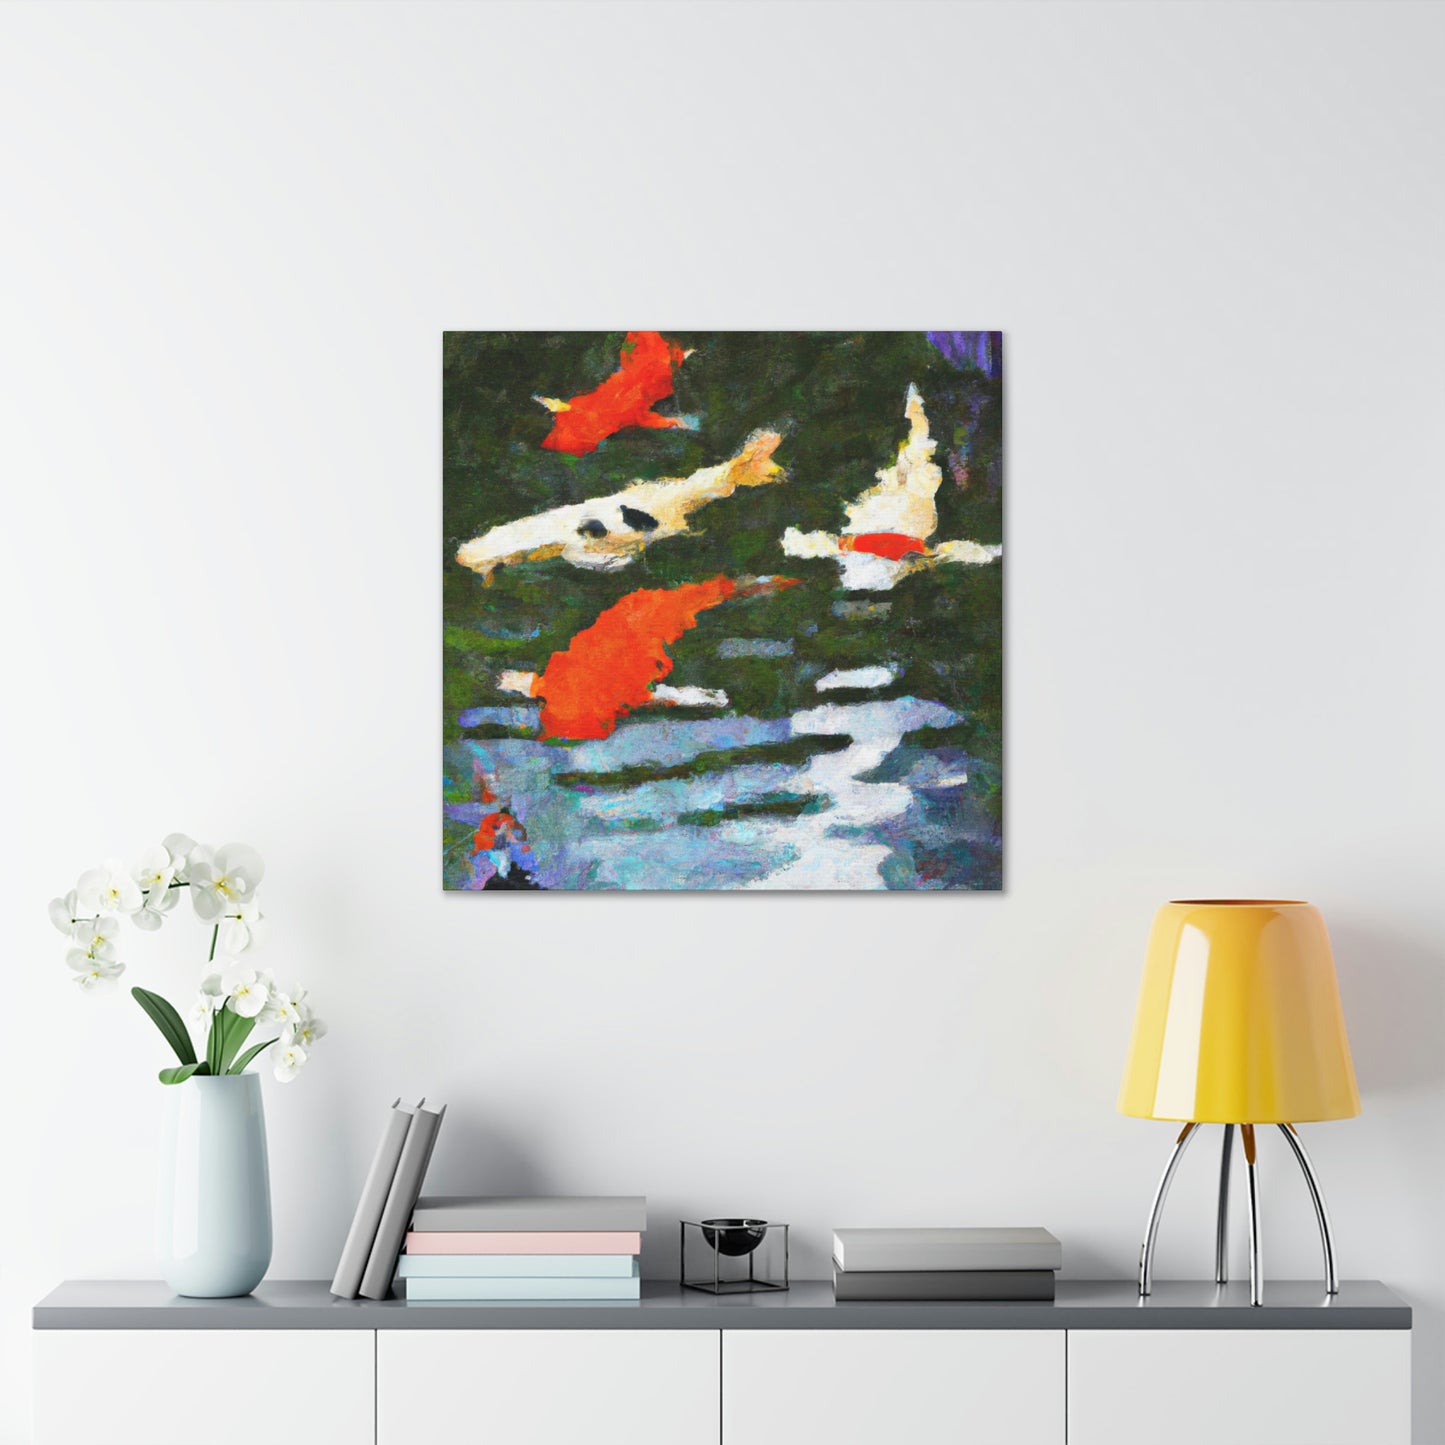 Aurevina - Koi Fish Canvas Wall Art